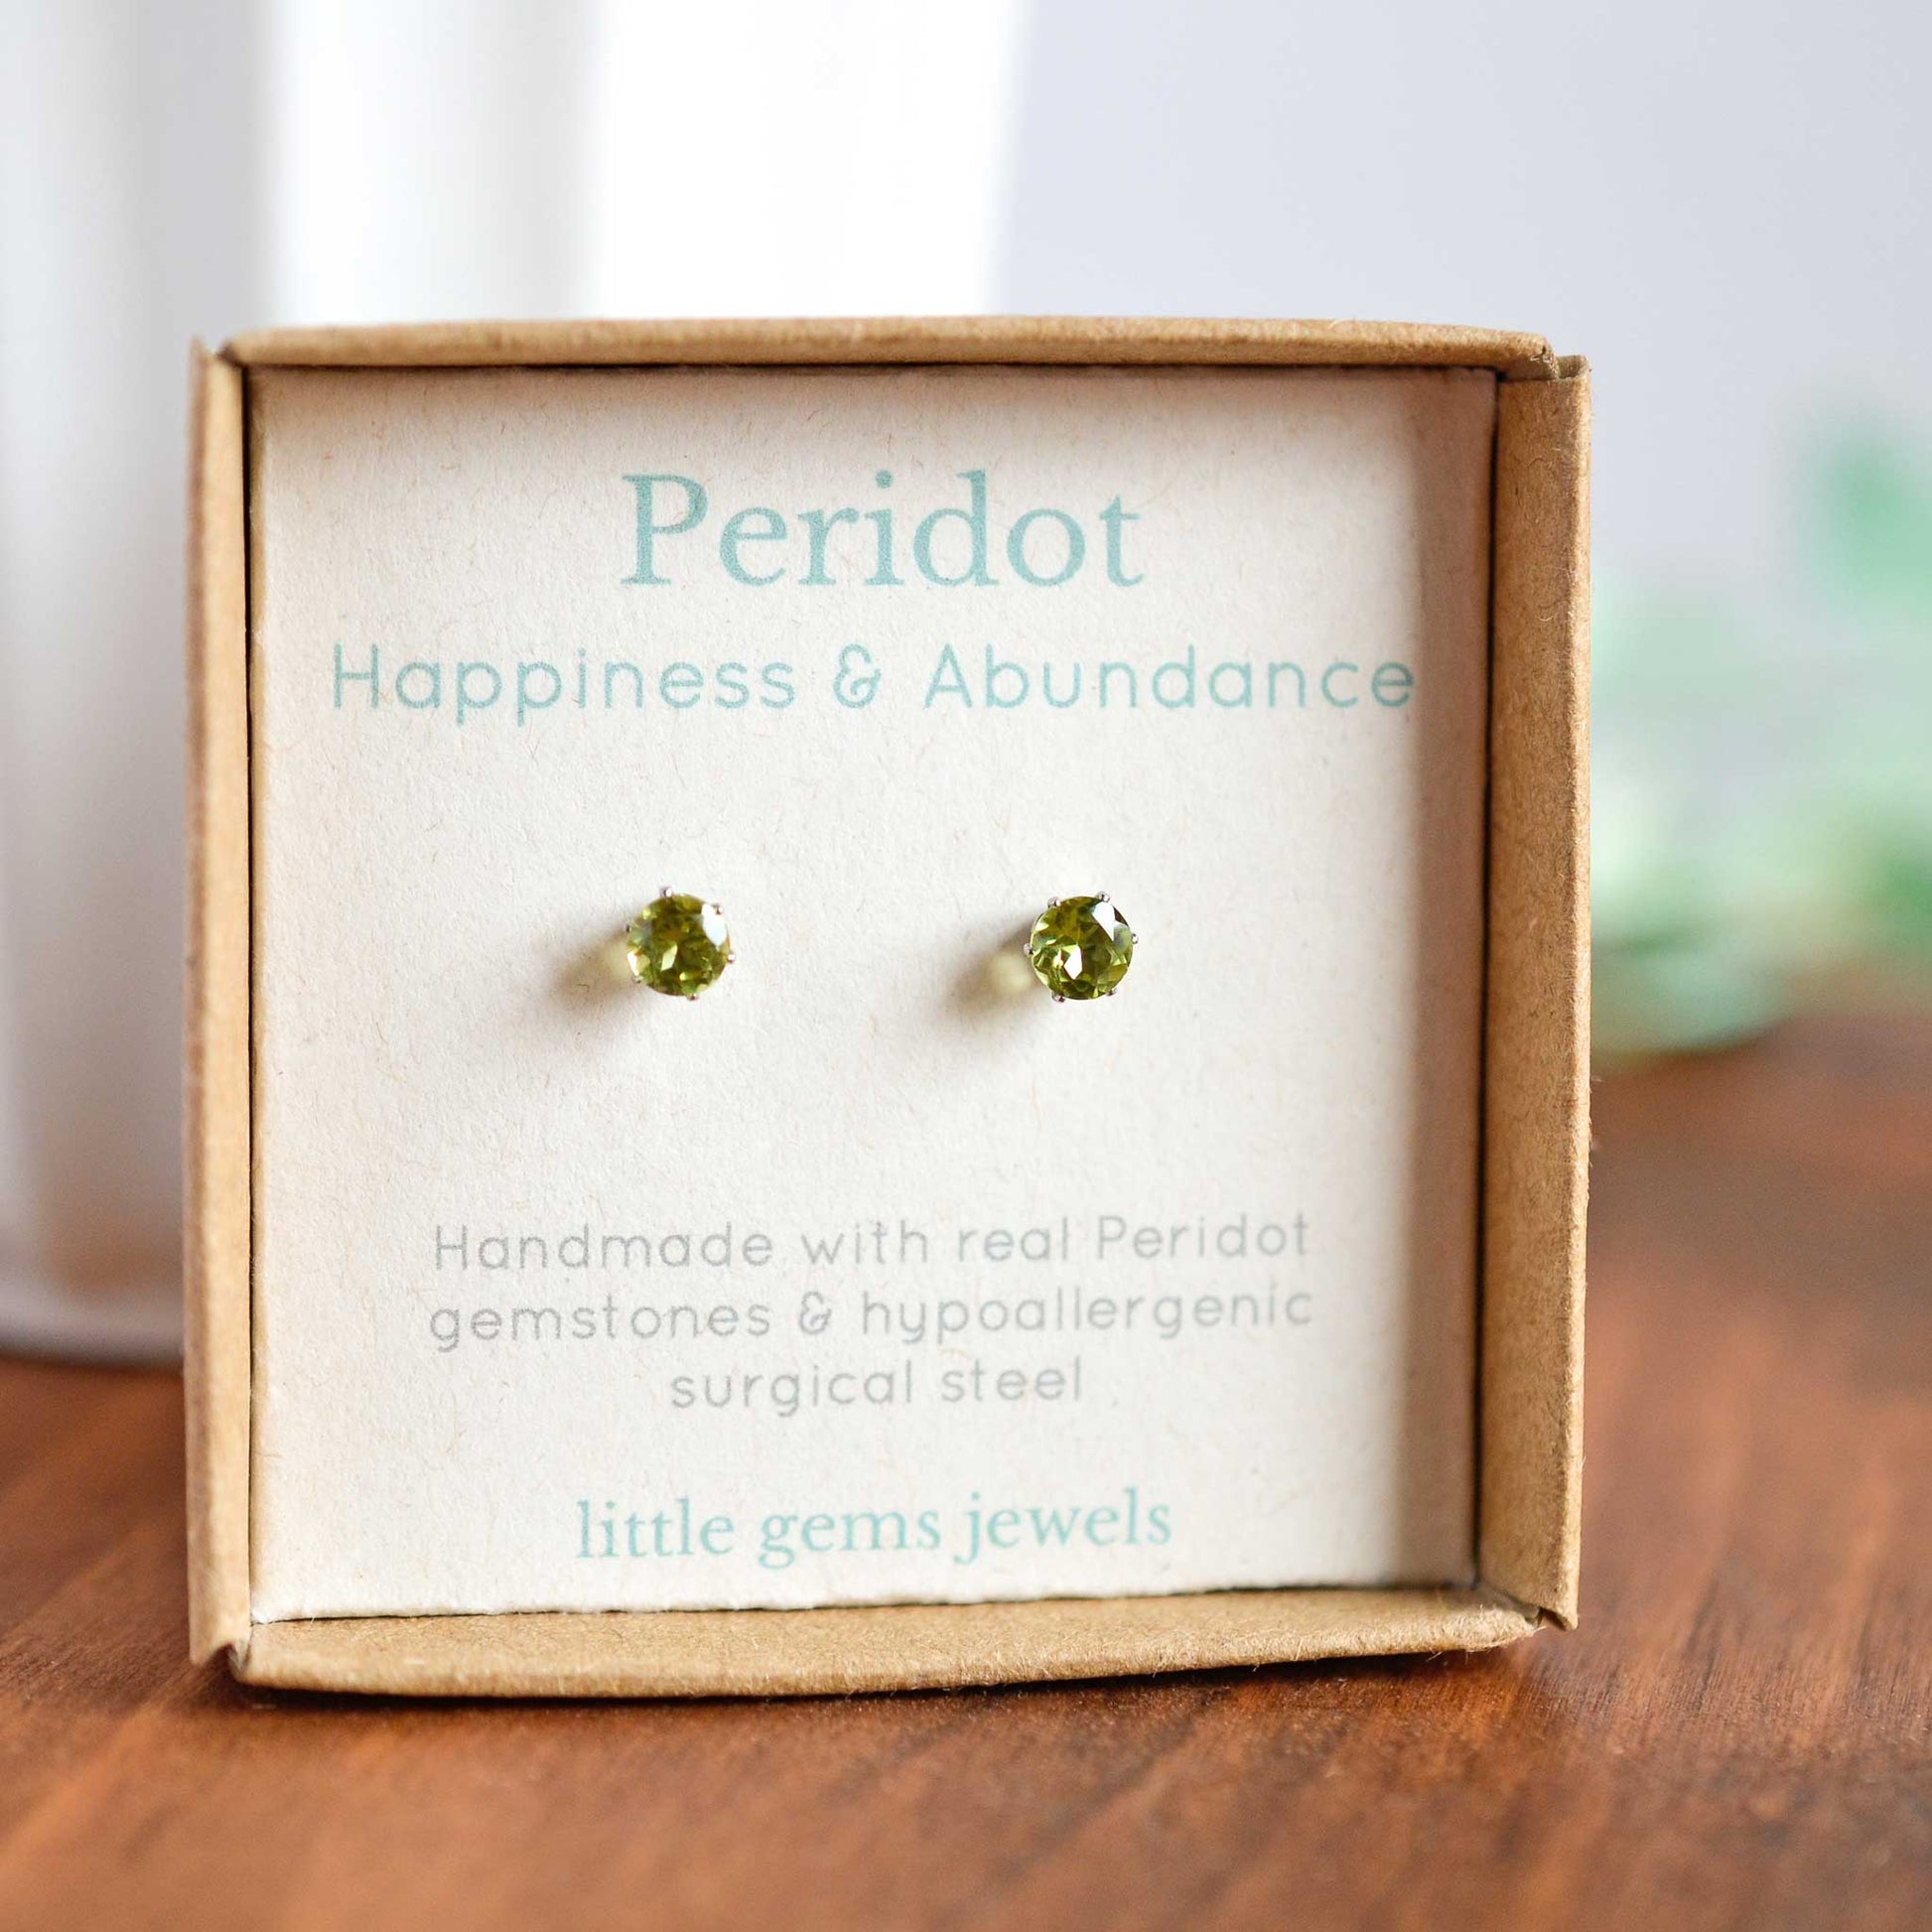 Tiny Peridot gemstone stud earrings in gift box